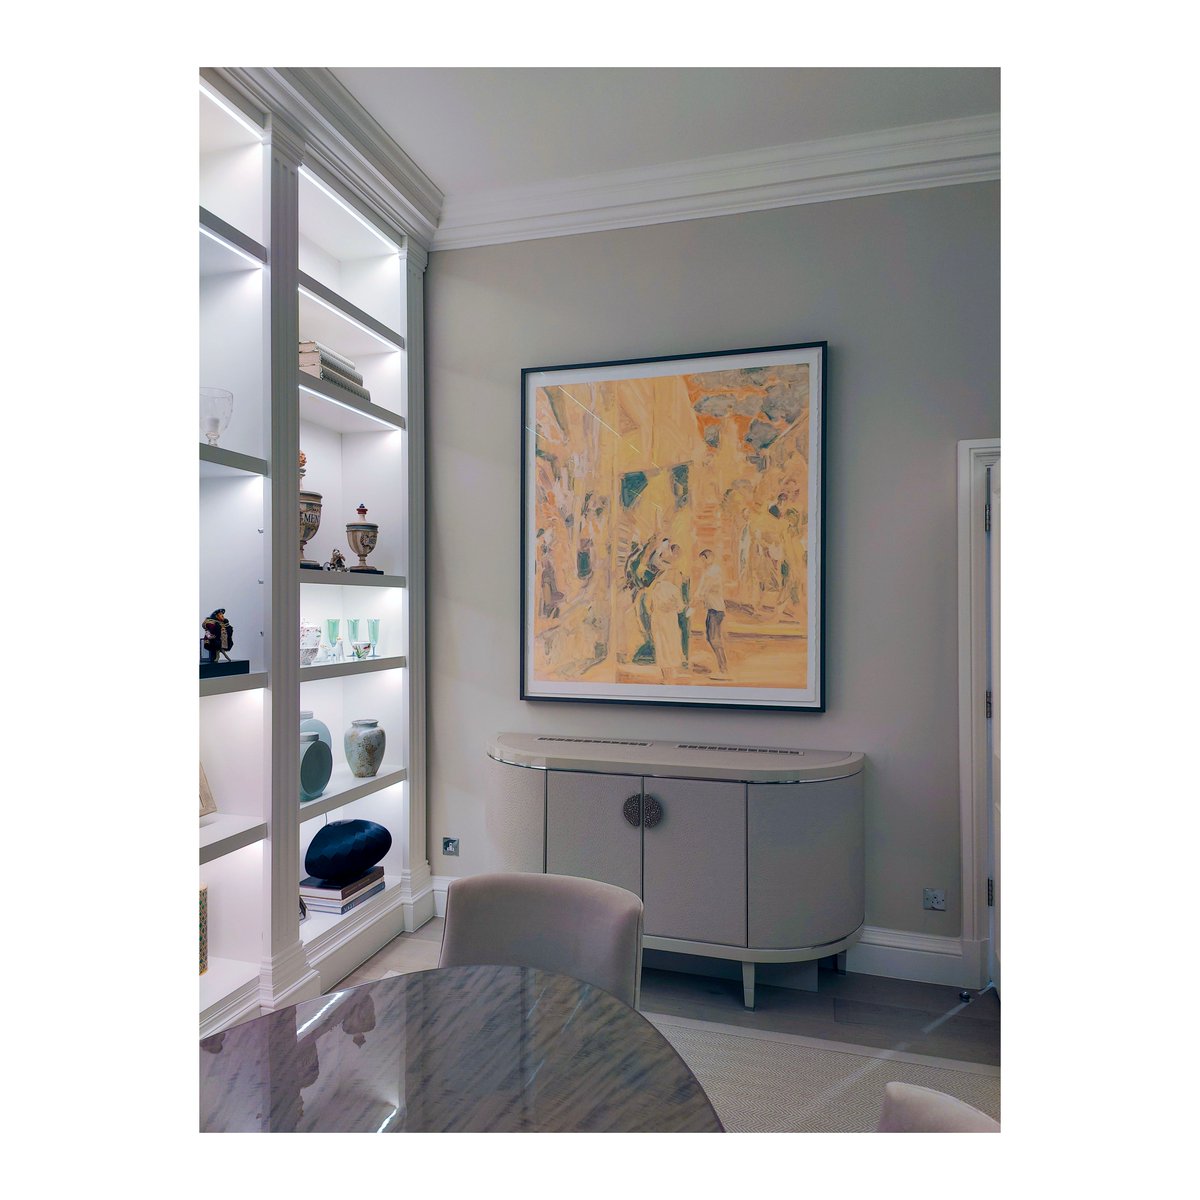 Installation of Marvel (2020) by Bruno Pacheco

@bbrunopacheco
@hollybush_gardens

#londonhomes #interiordesign #homeinspiration #townhouse #luxuryproperty #homeinterior  #interiorstyling #interiorsinspo #interiorinspirations #londoninteriors #luxuryinteriors